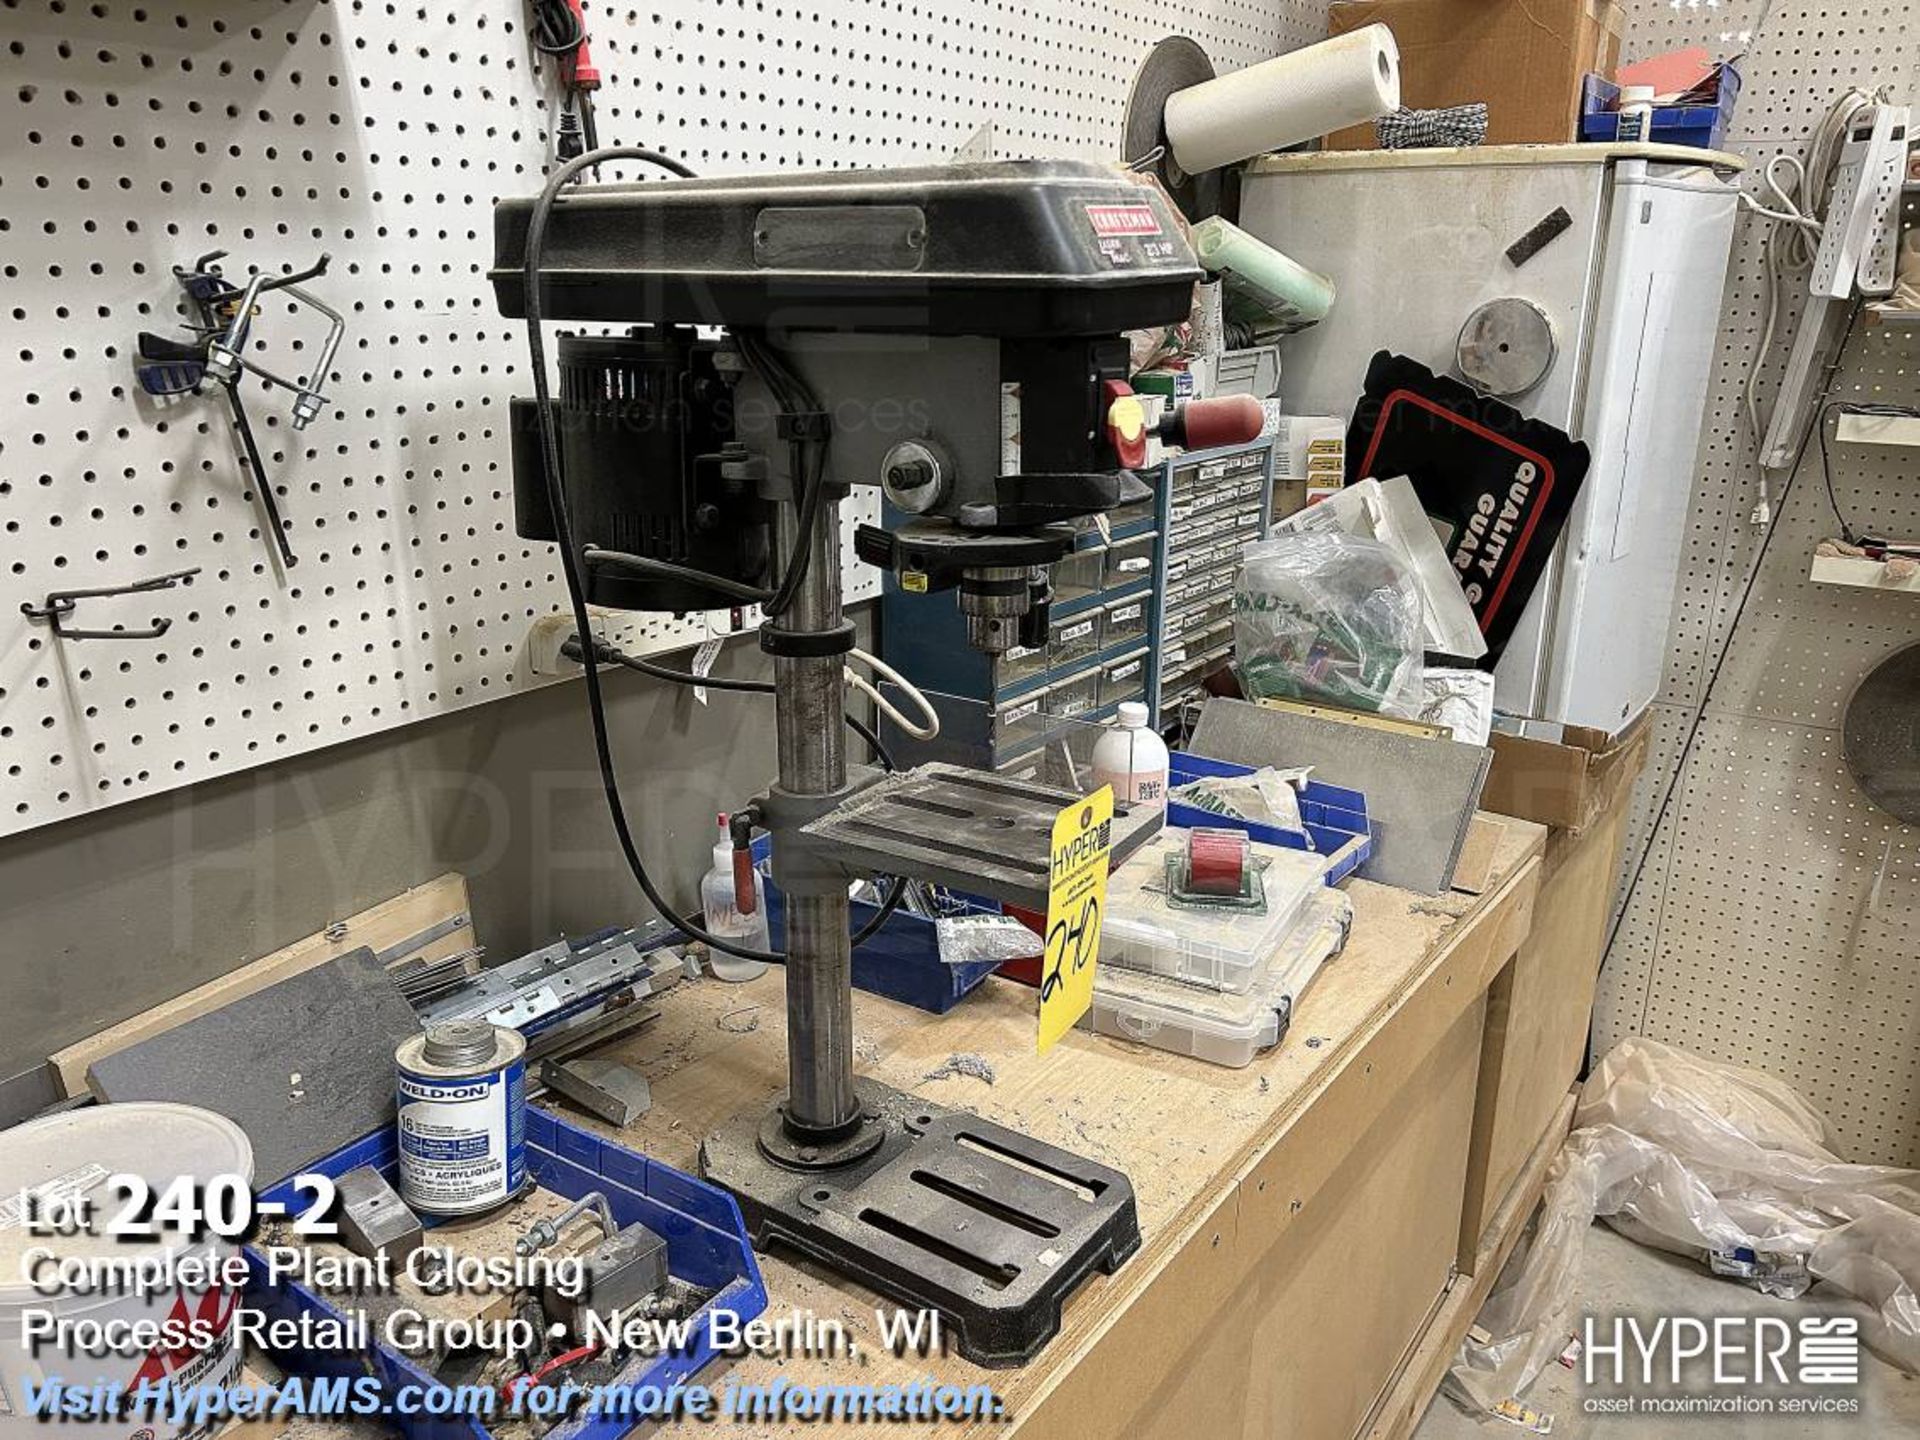 Craftsman 2/3hp bench top drill press - Image 2 of 4